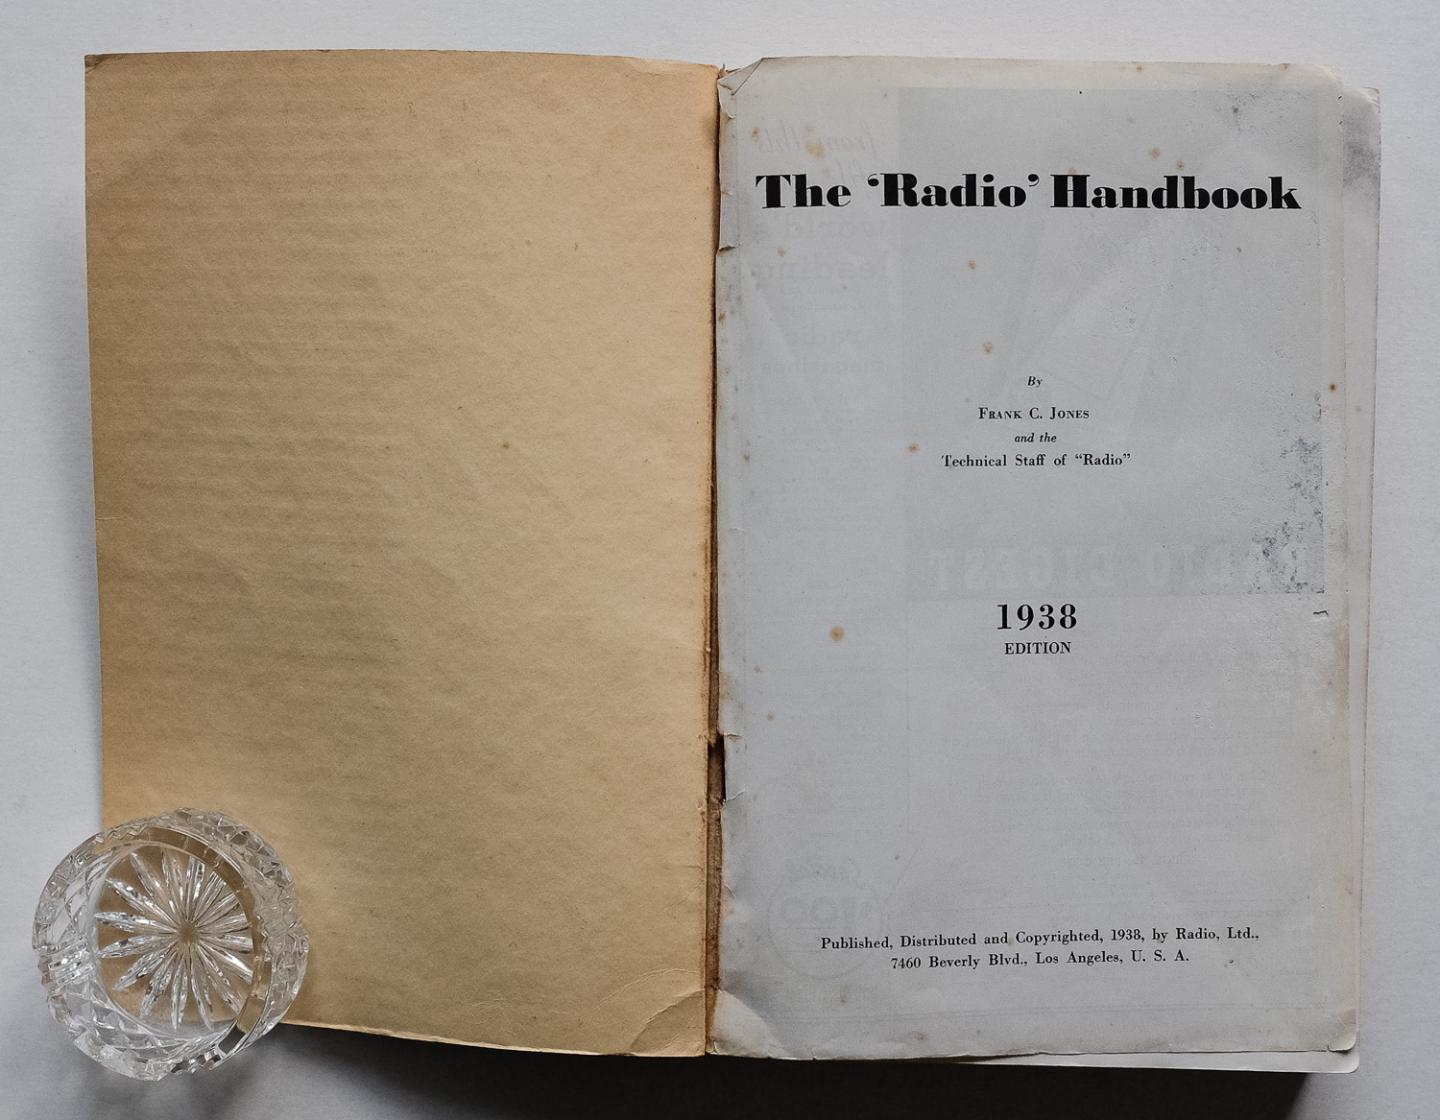 ,Frank C. Jones (Author) and Technical Staff of "Radio" - The Radio Handbook 1938